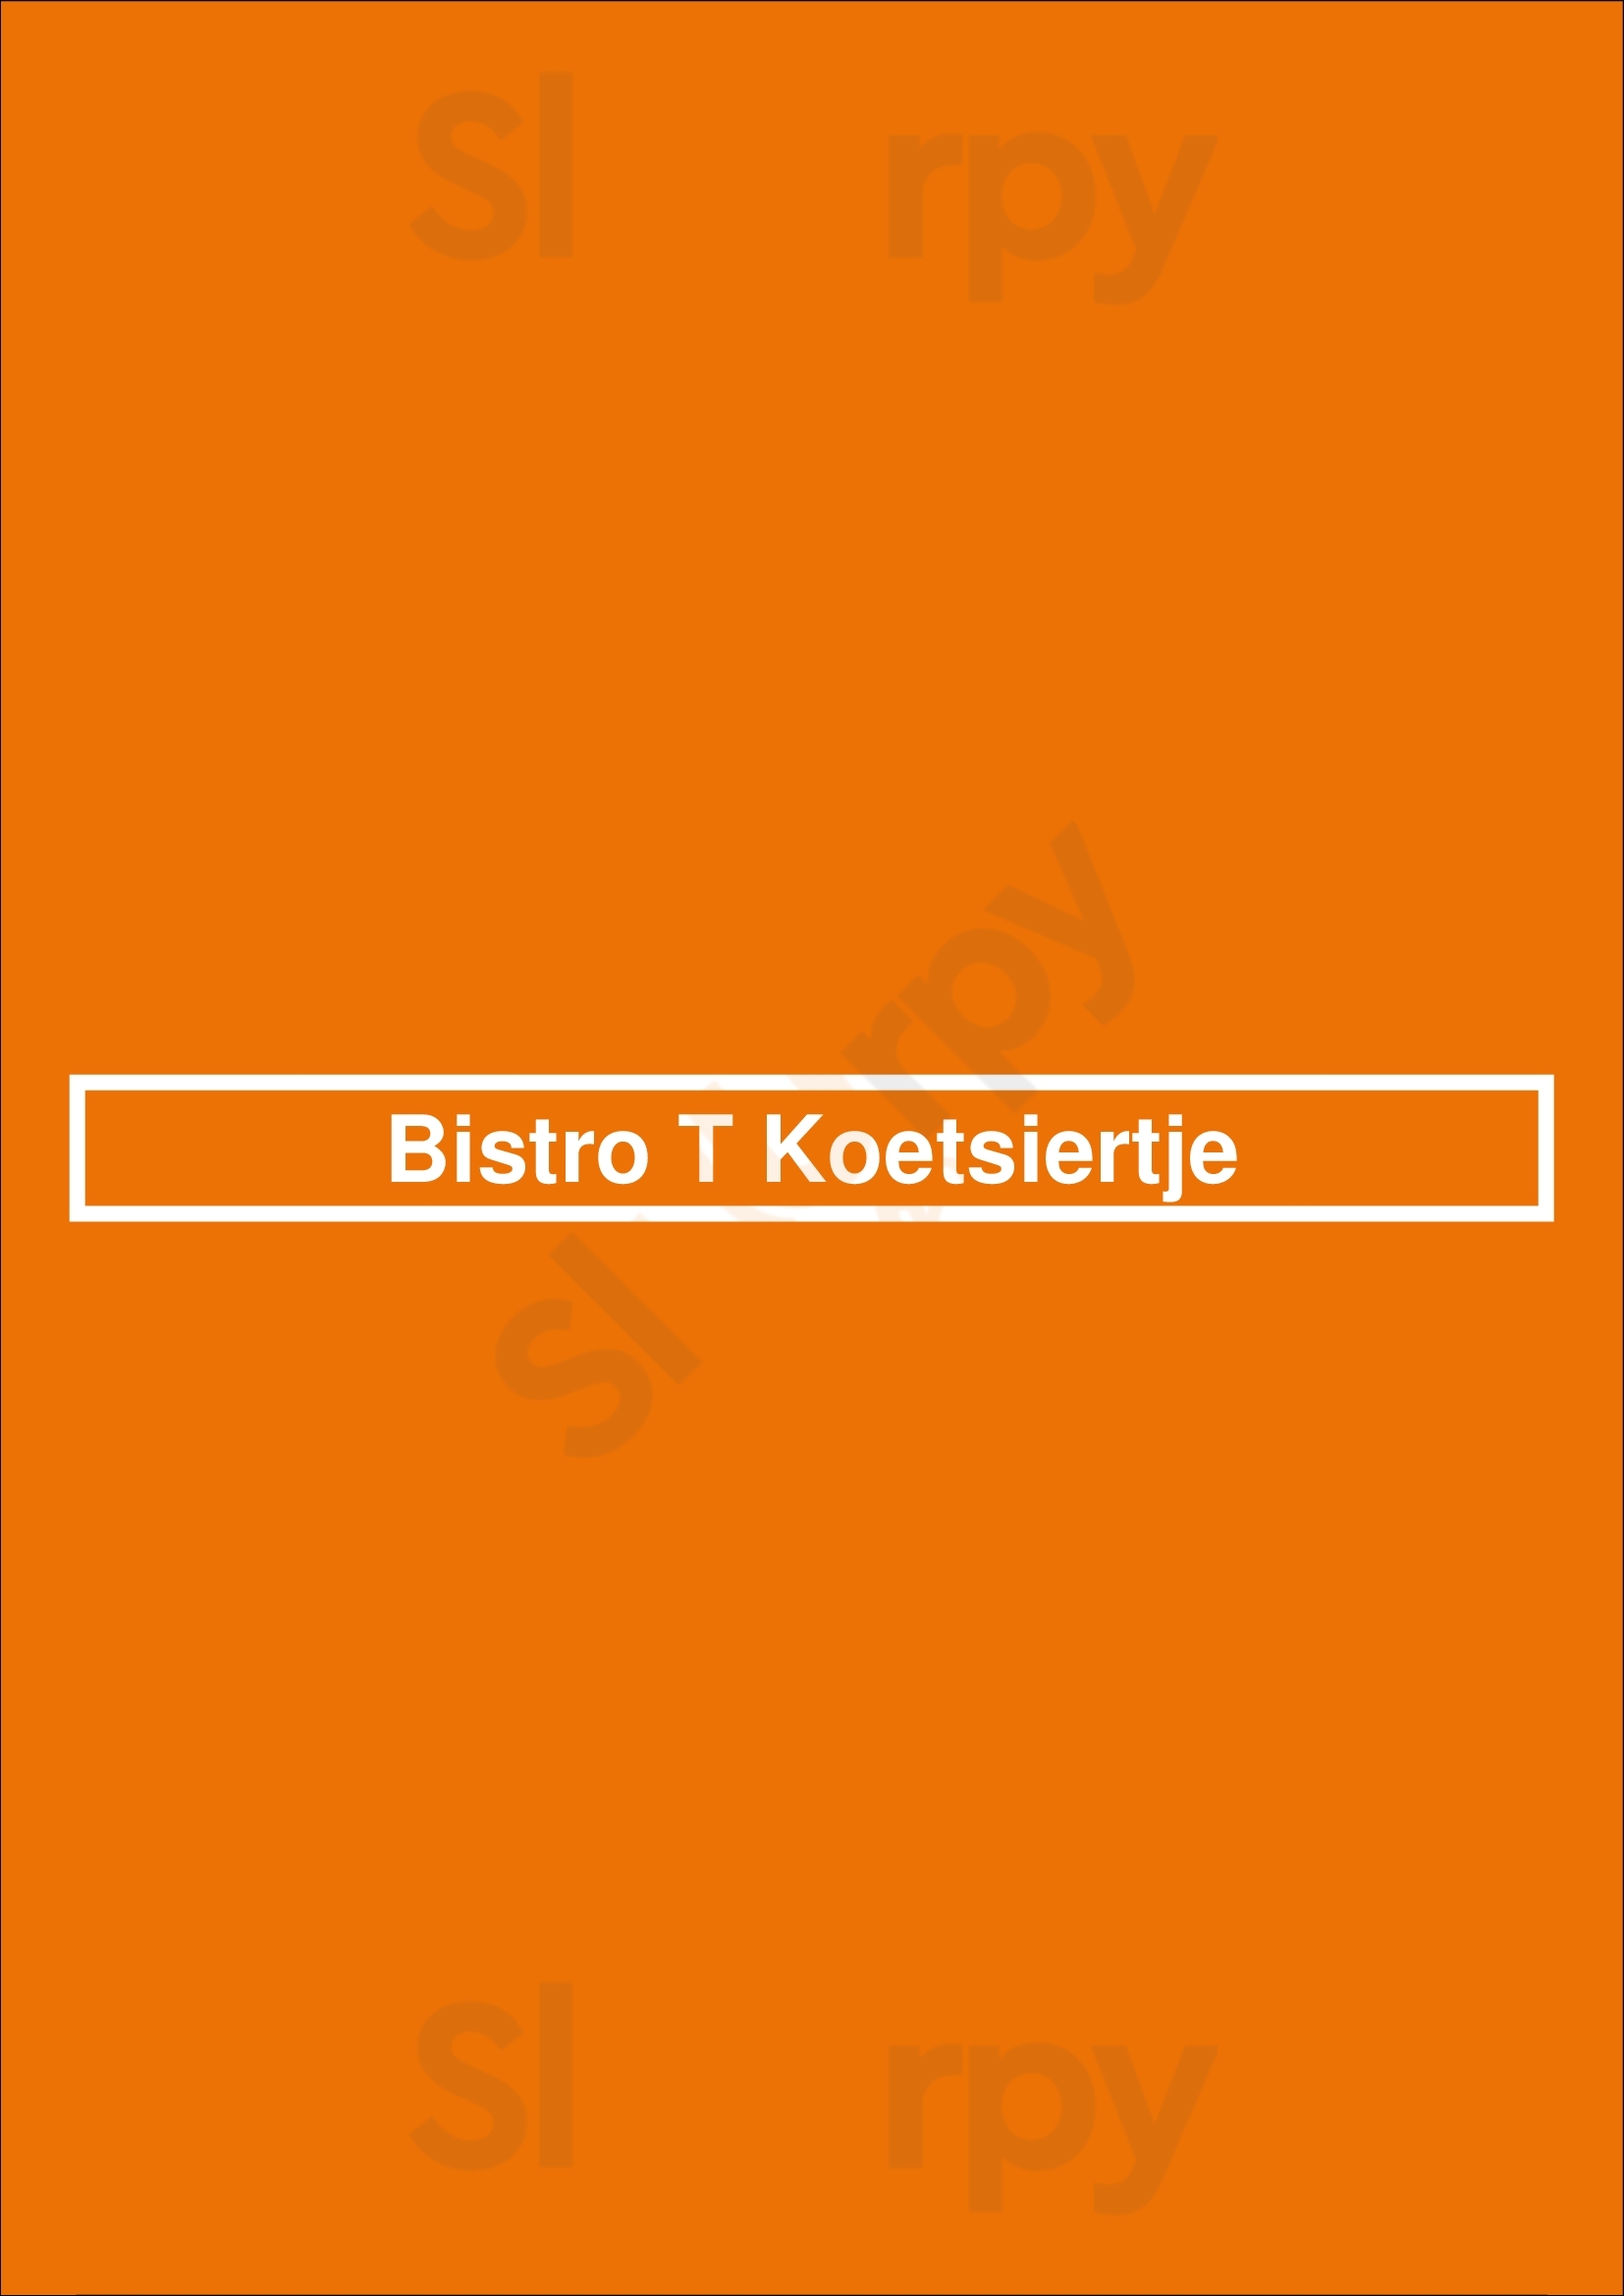 Bistro T Koetsiertje Oldenzaal Menu - 1